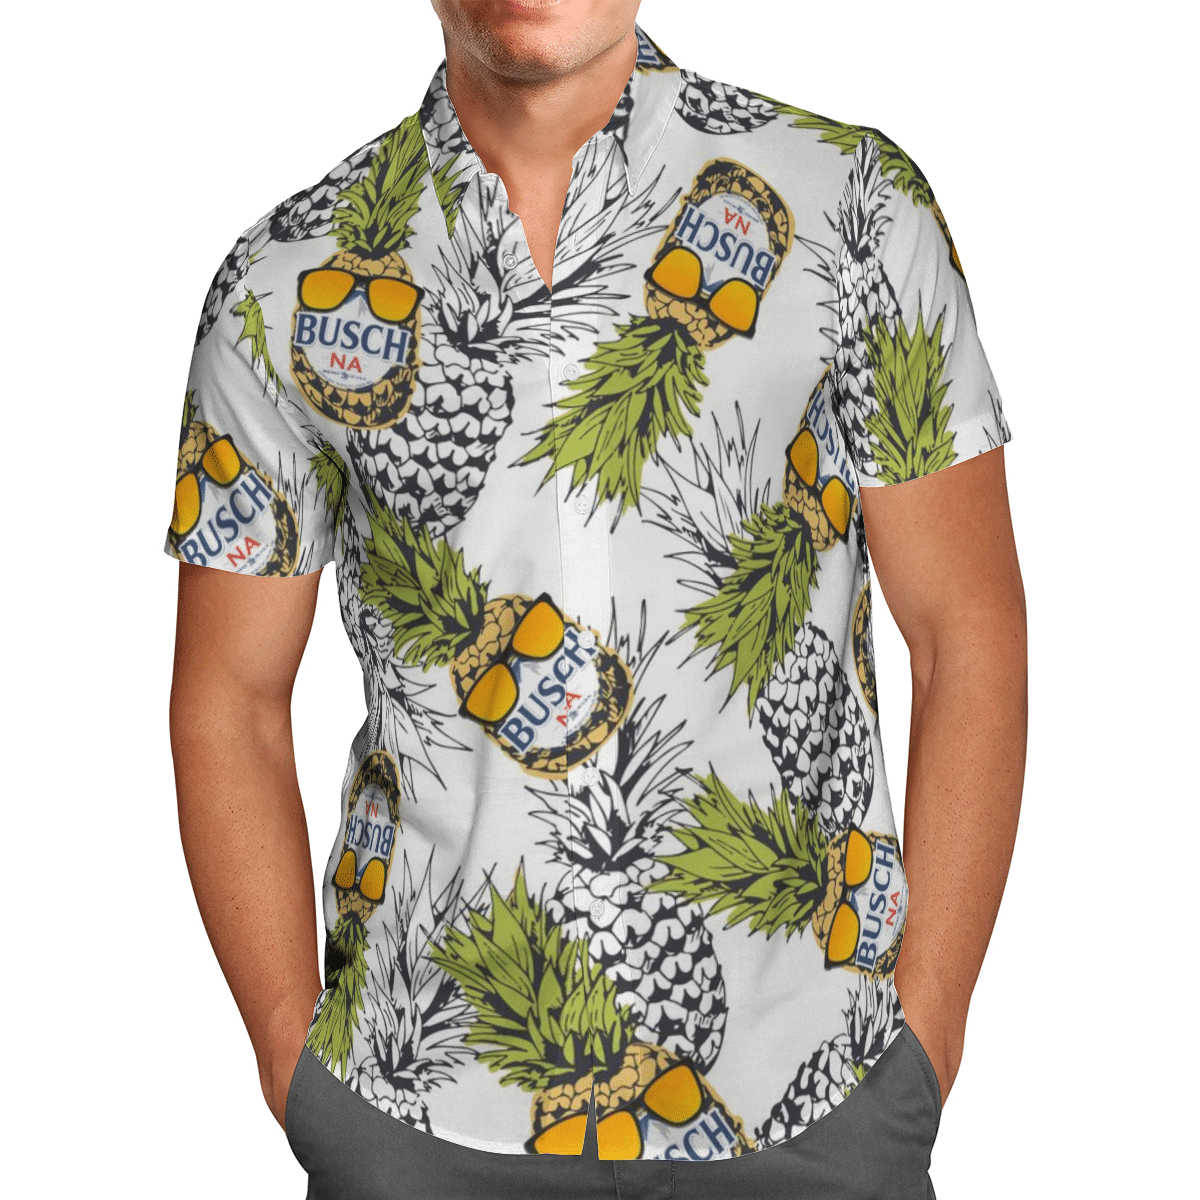 Pineapple busch NA Hawaiian shirt and short 1